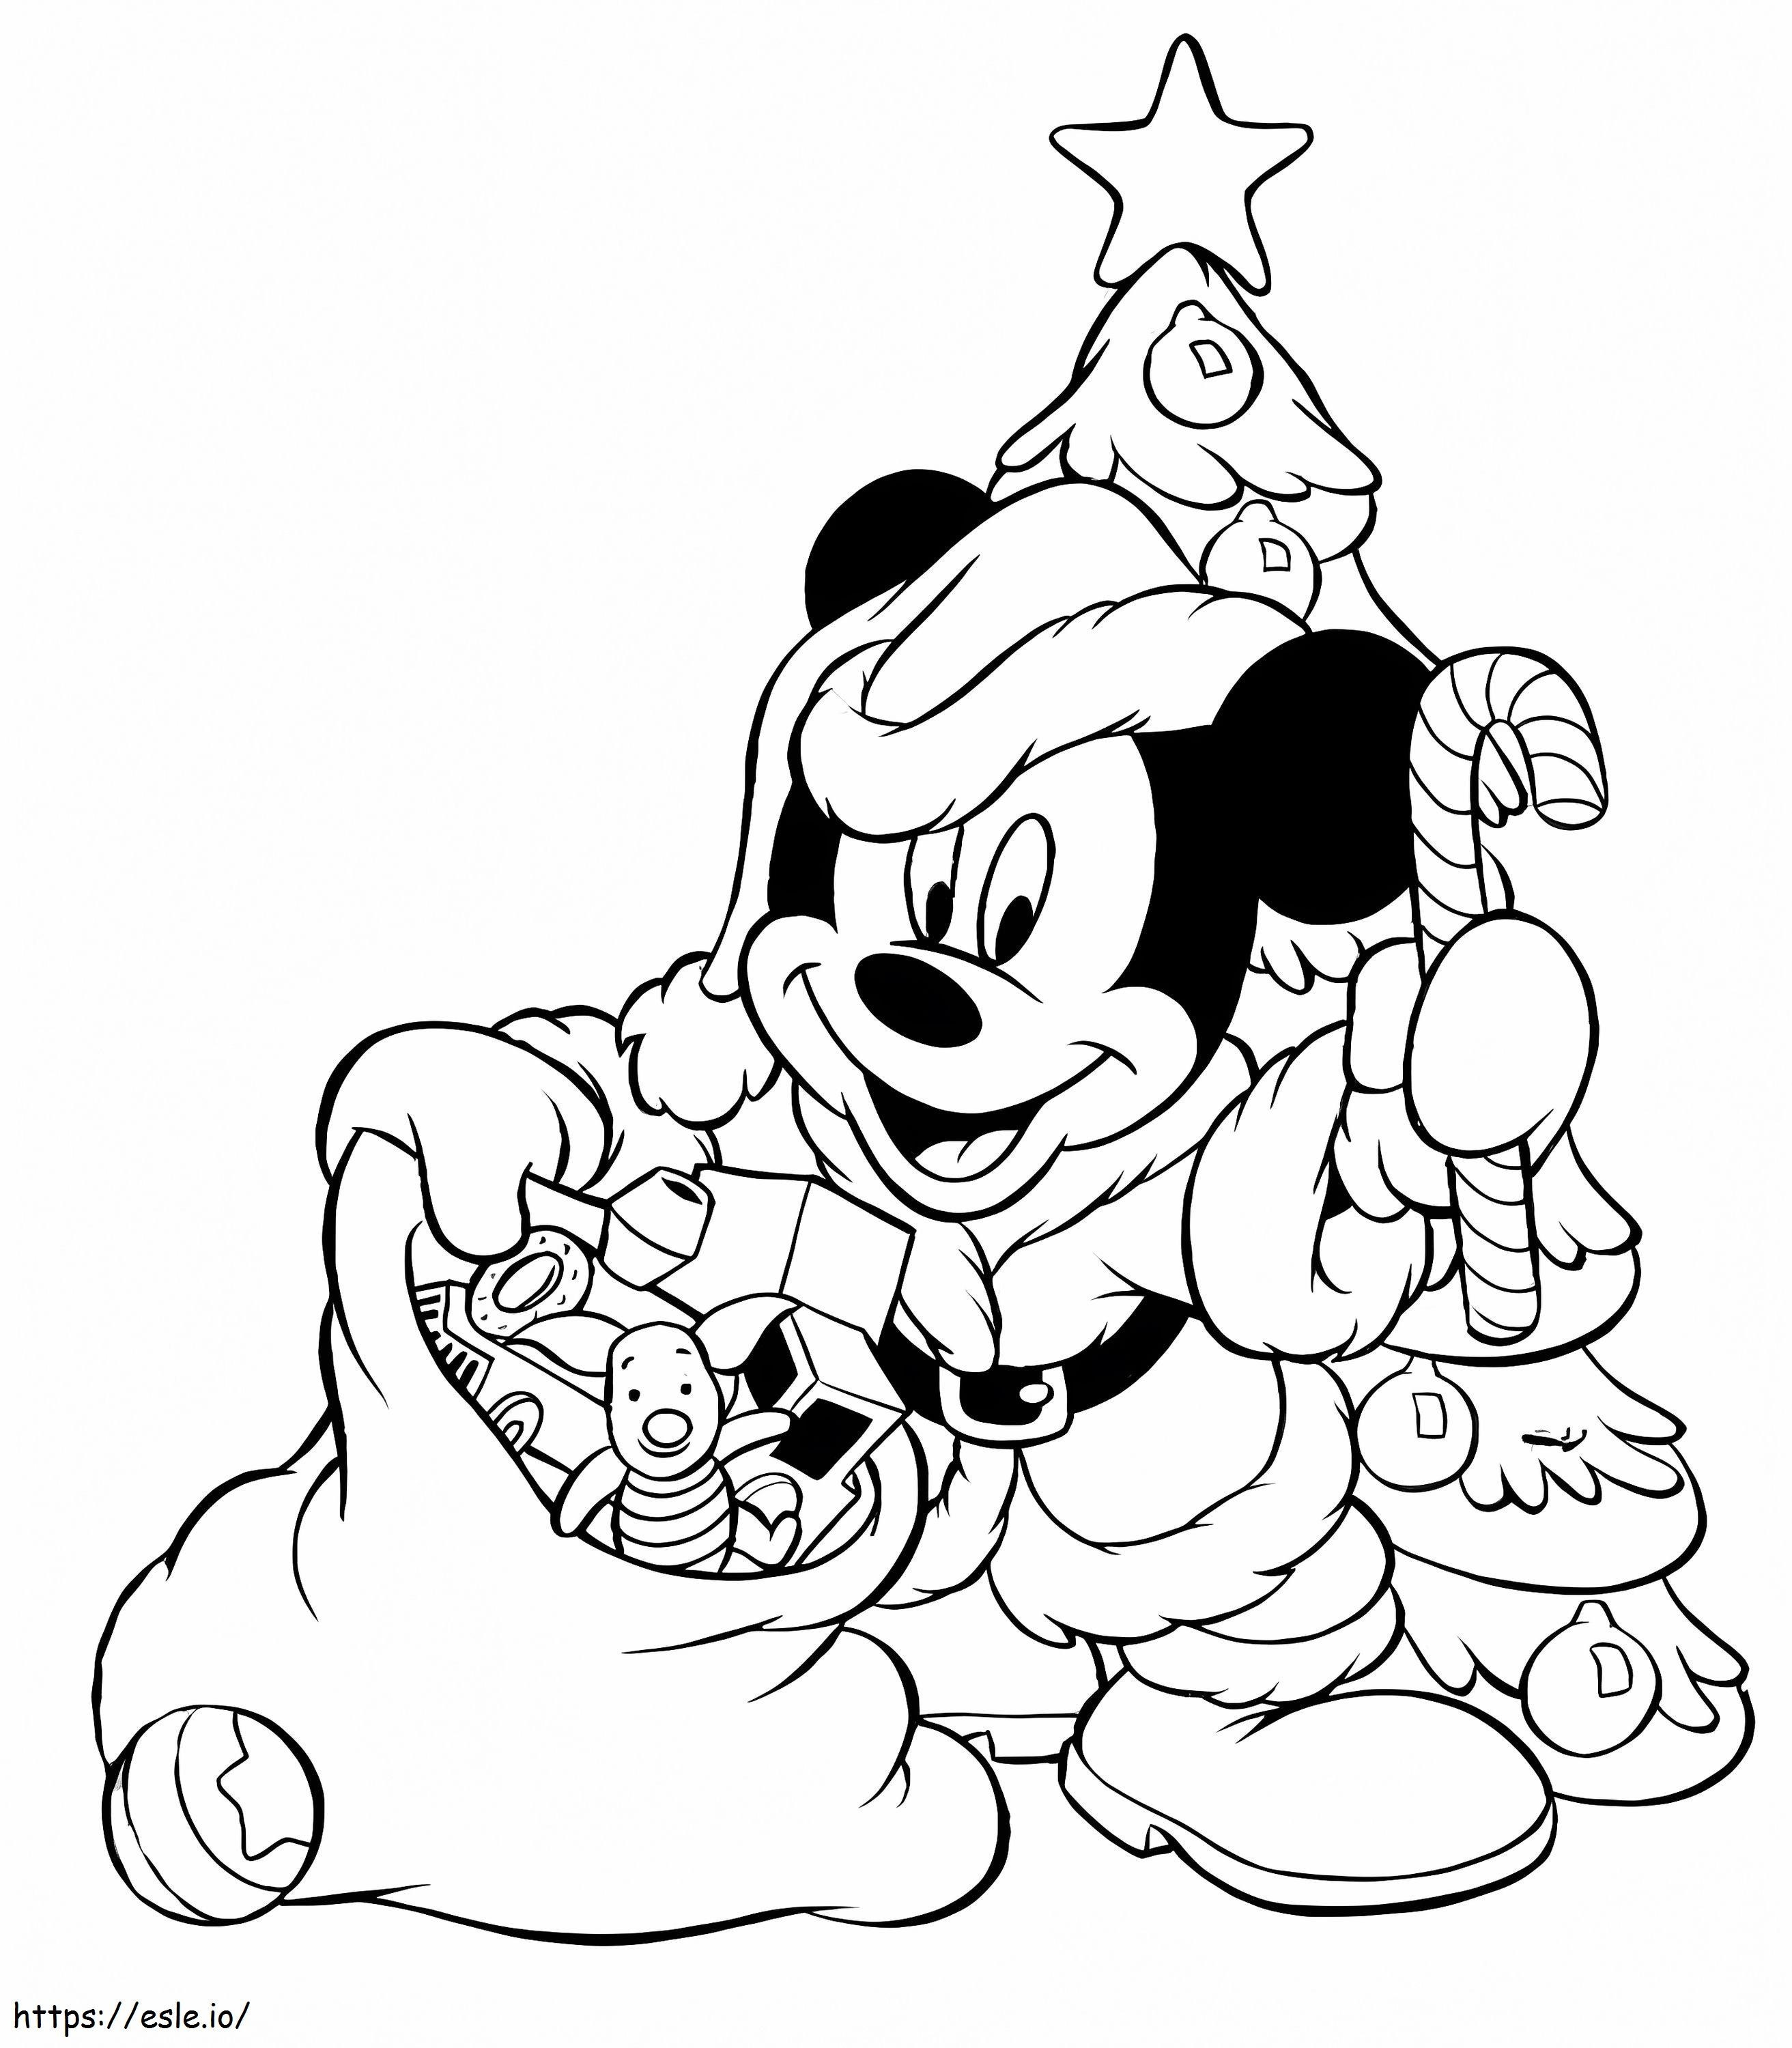 Papá Noel navideño de Mickey Mouse para colorear